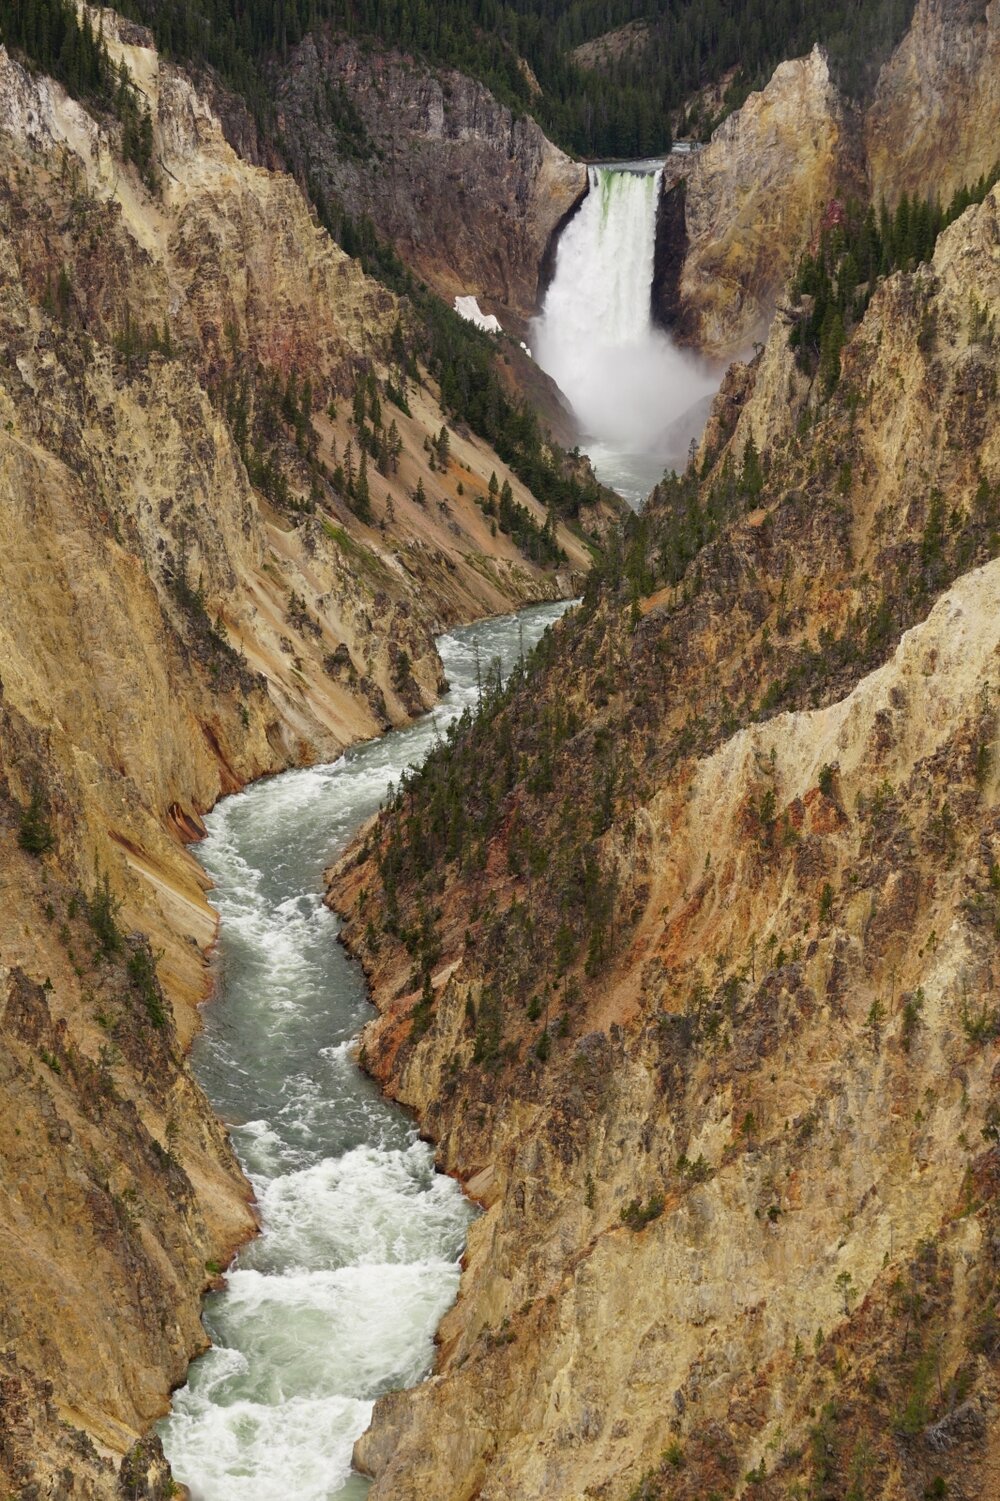 Grand Canyon of Yellowstone - Yellowstone River gorge waterfall